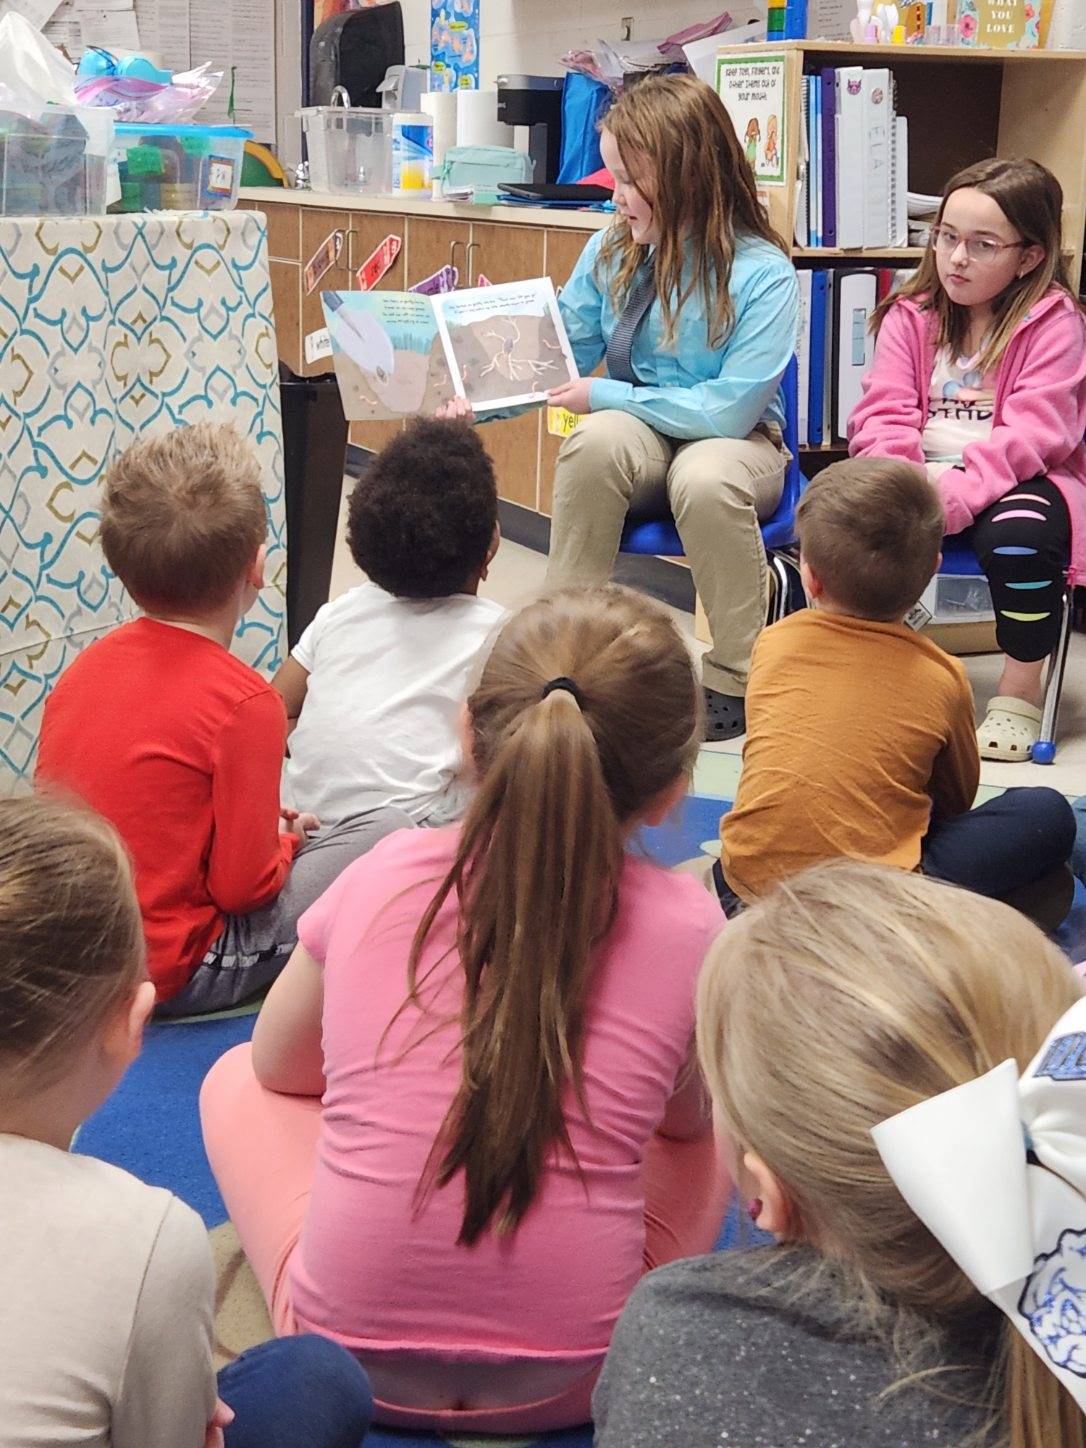 3rd grade students read to preschool